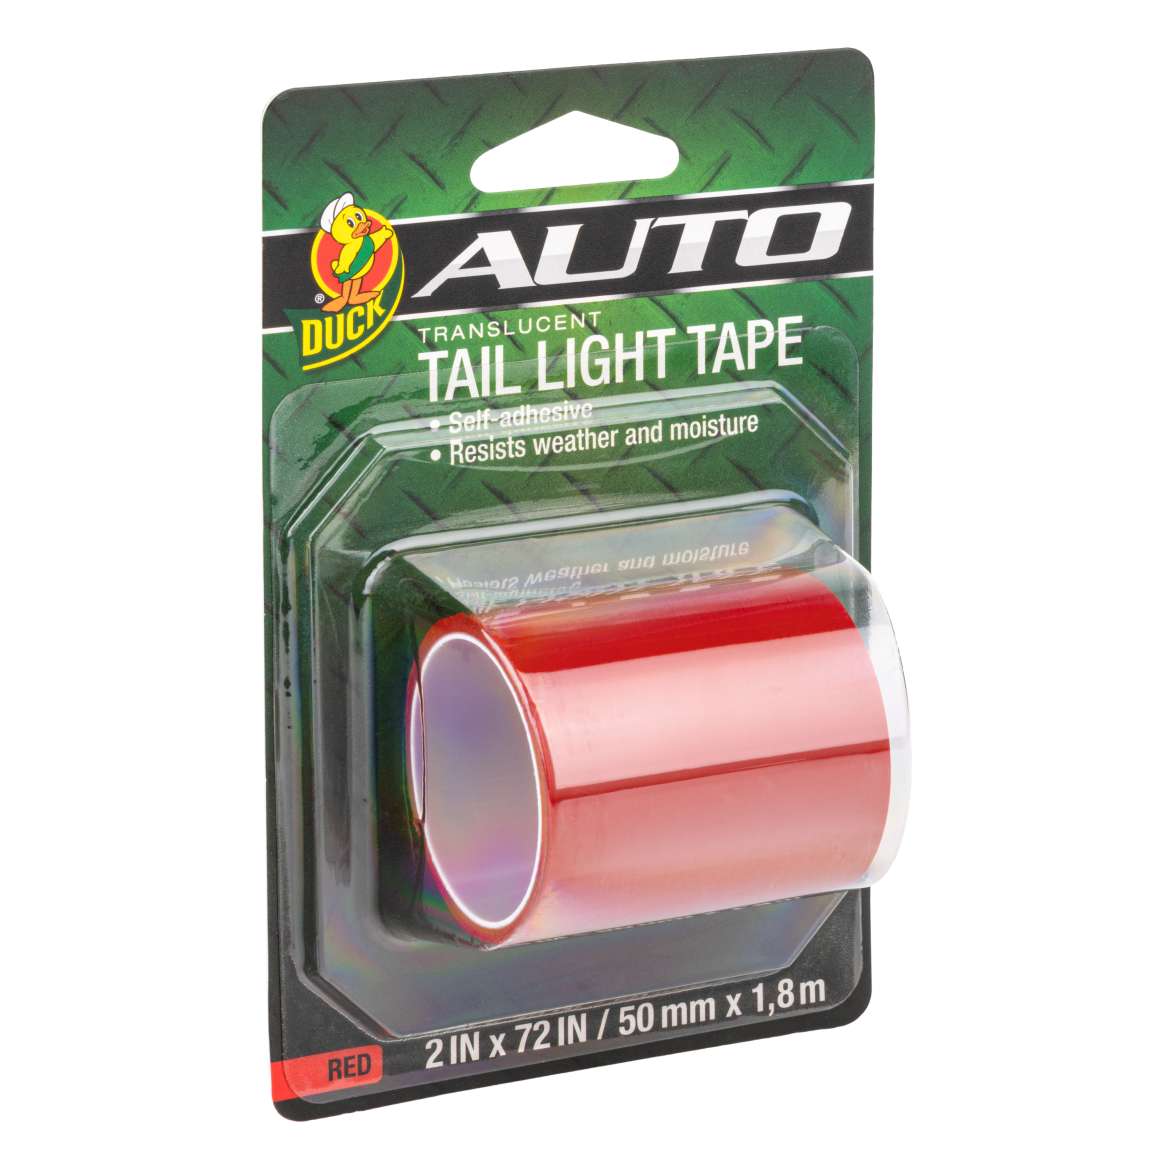 Tail Light Tape